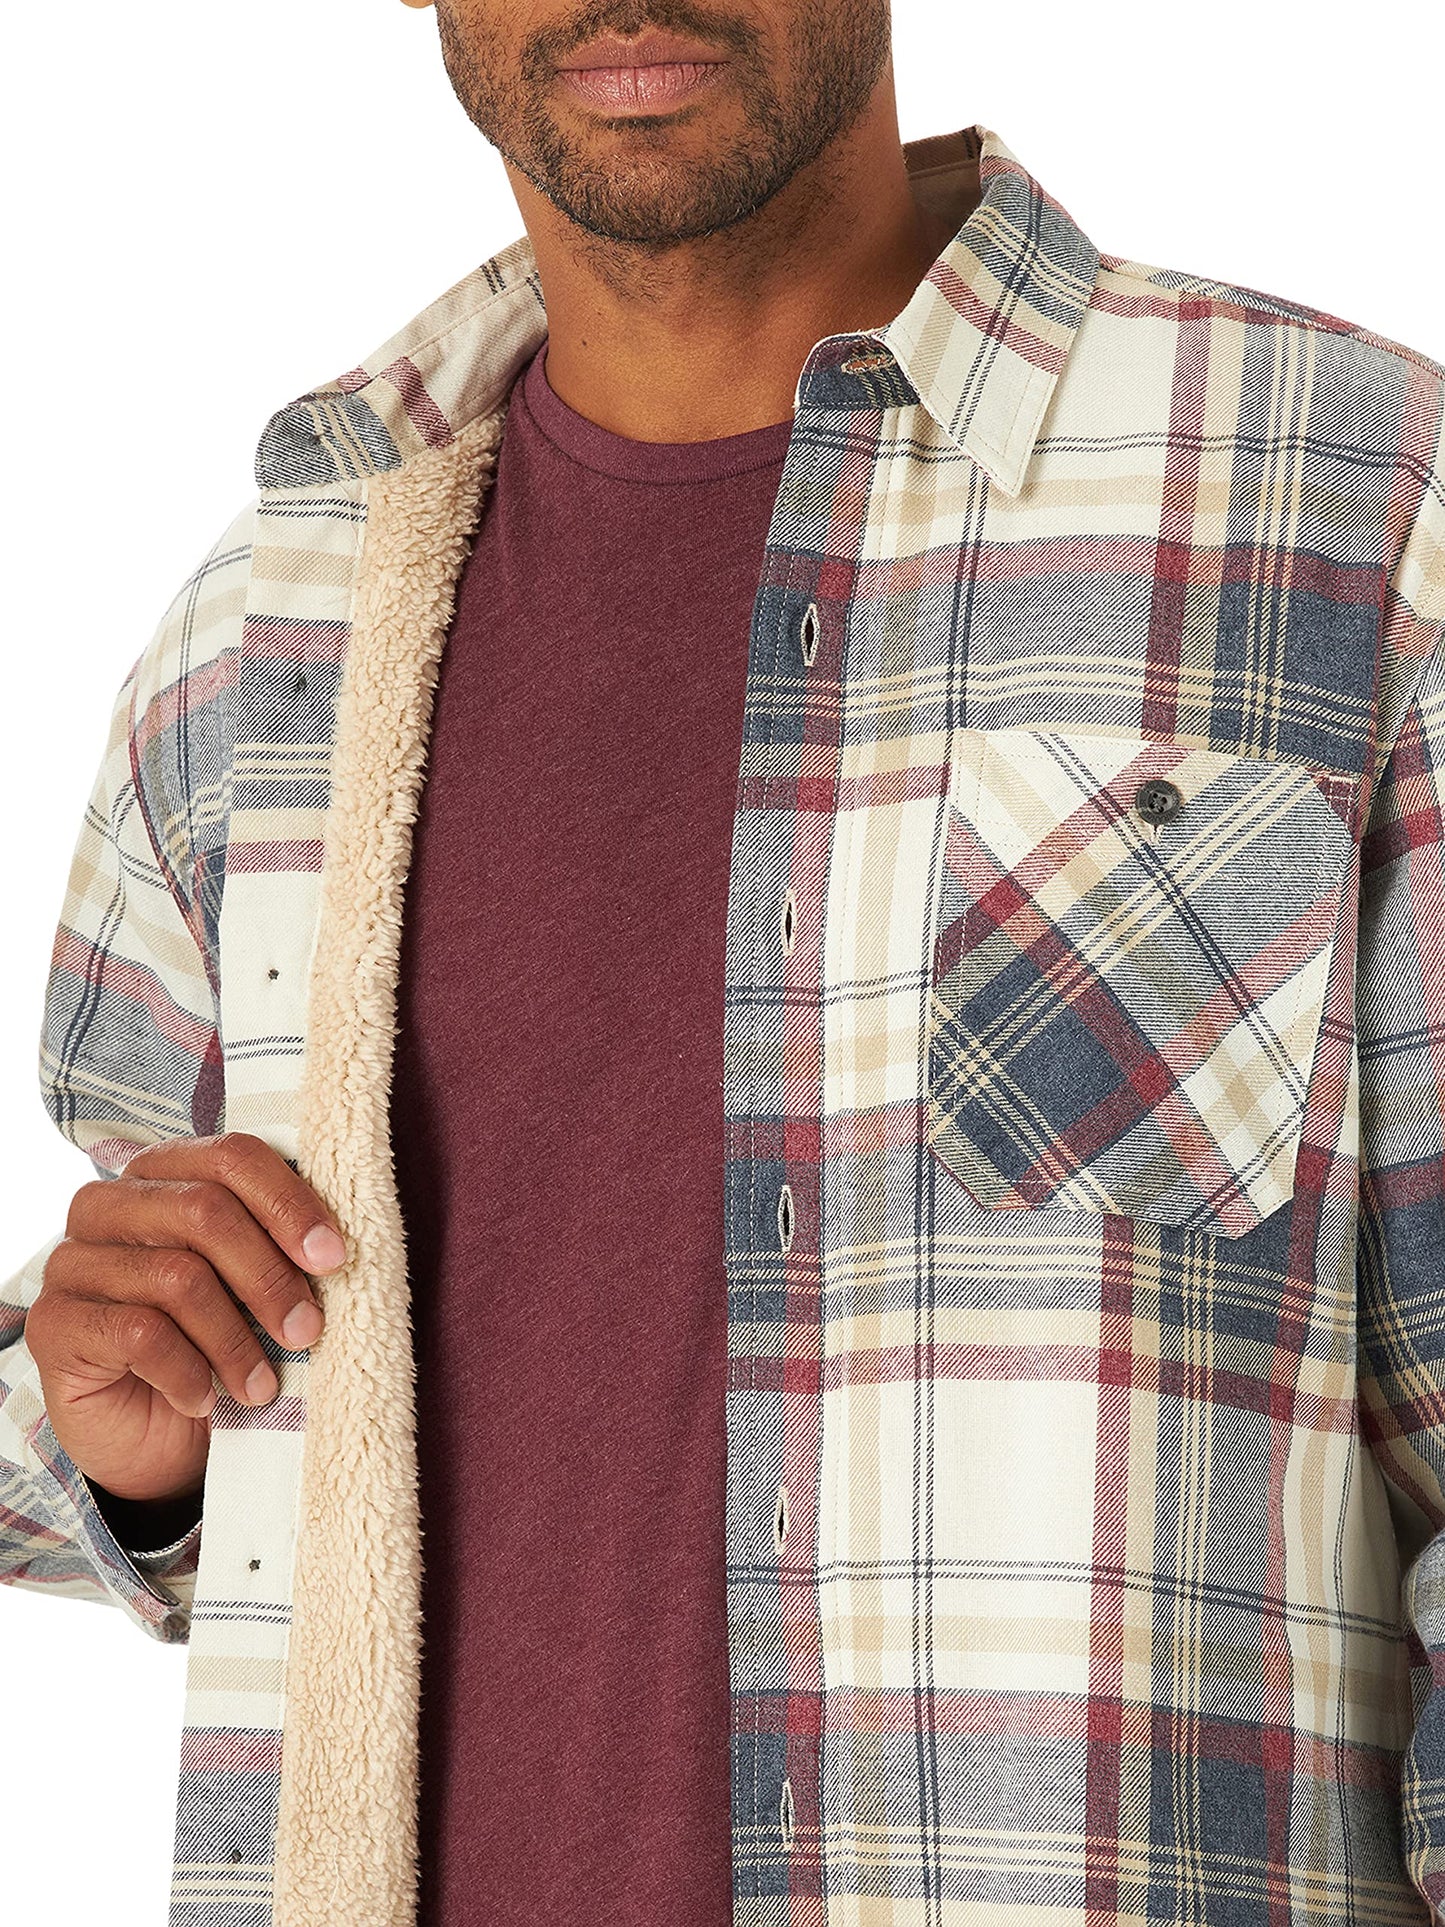 Wrangler Authentics Men's Long Sleeve Sherpa Lined Shirt Jacket, Light Beige Heather, Medium